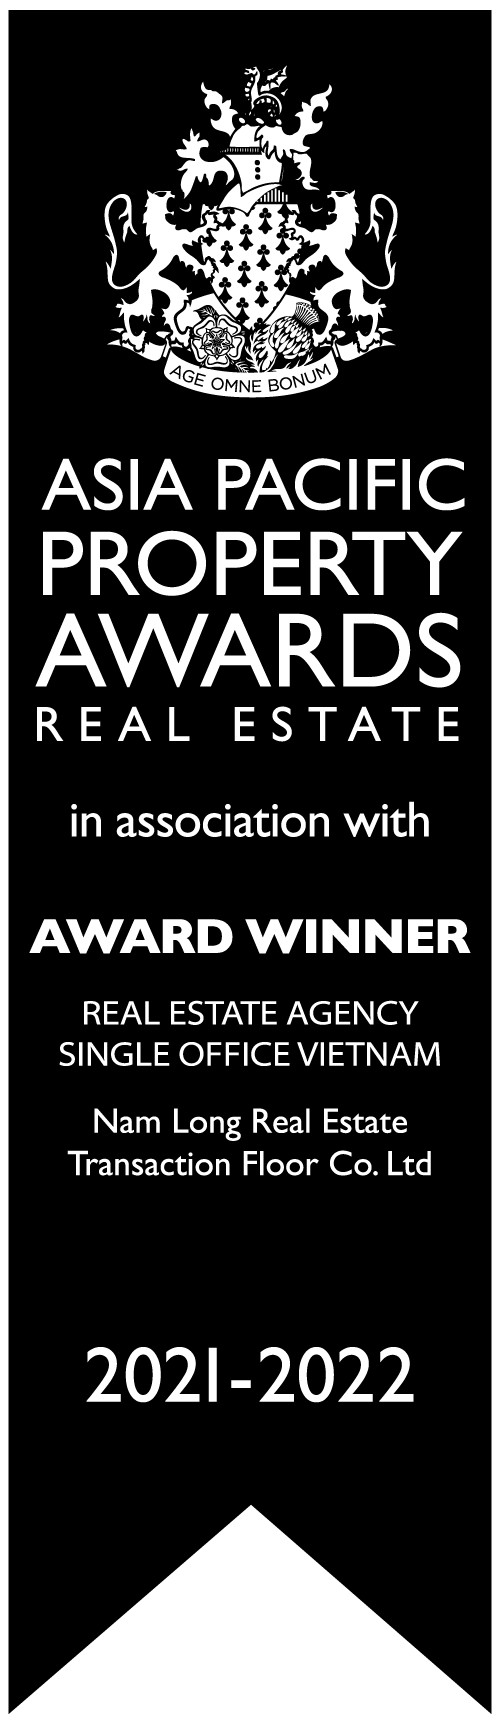 Real Estate Agency Single Office Vietnam 2021 - 2022